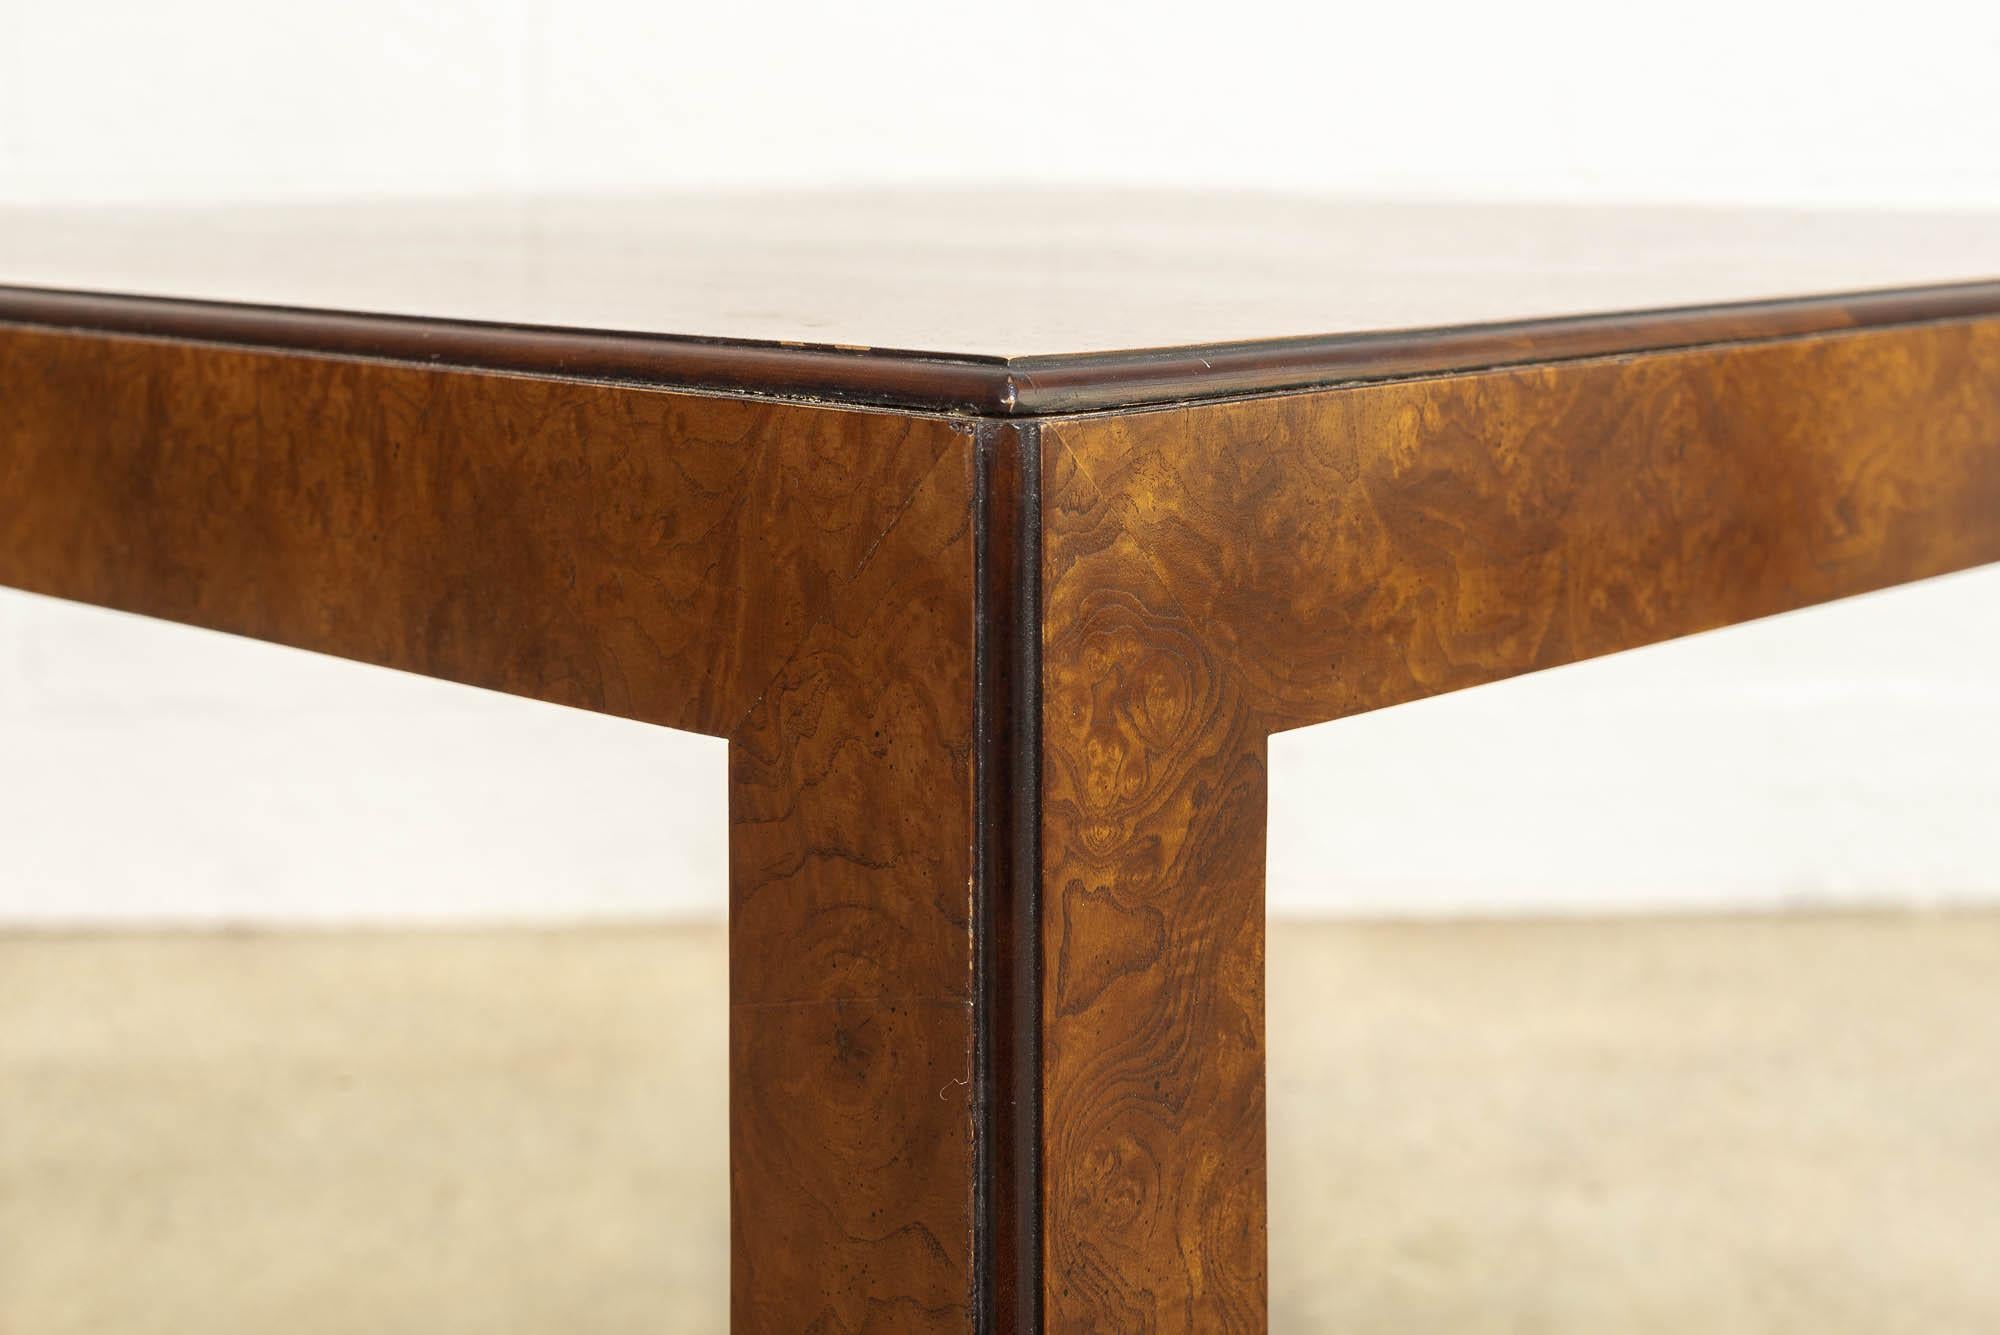 Midcentury John Widdicomb Square Burl Wood Coffee Table Side Table, 1970s For Sale 3